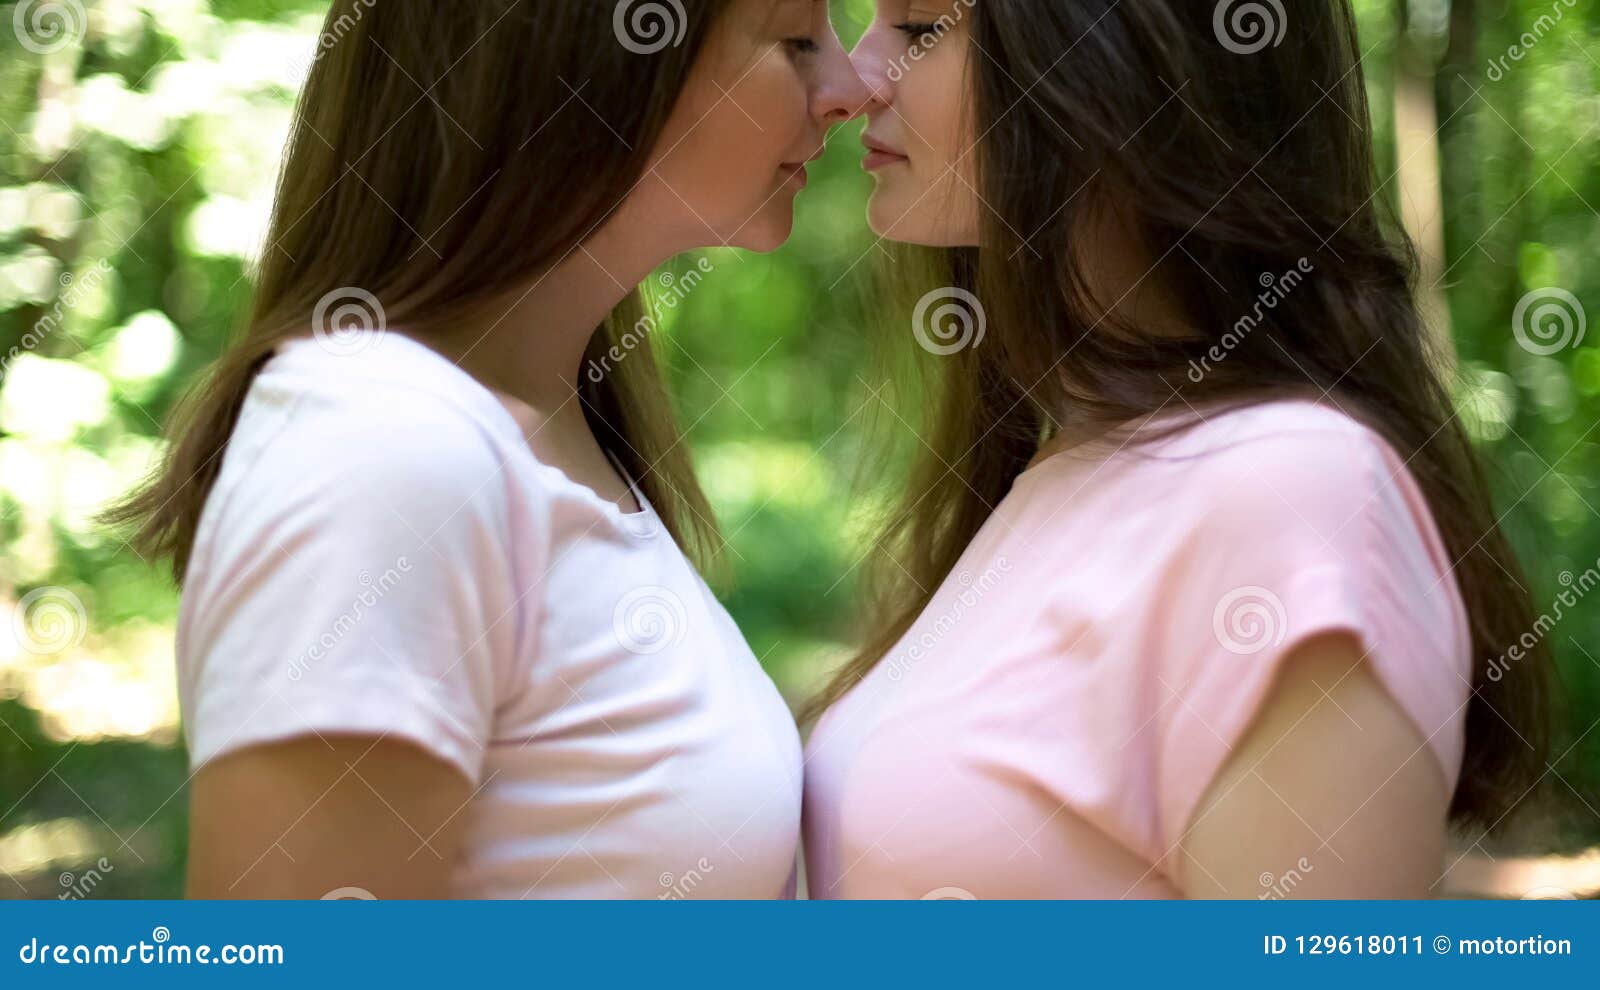 Lesbians Girls Kiss